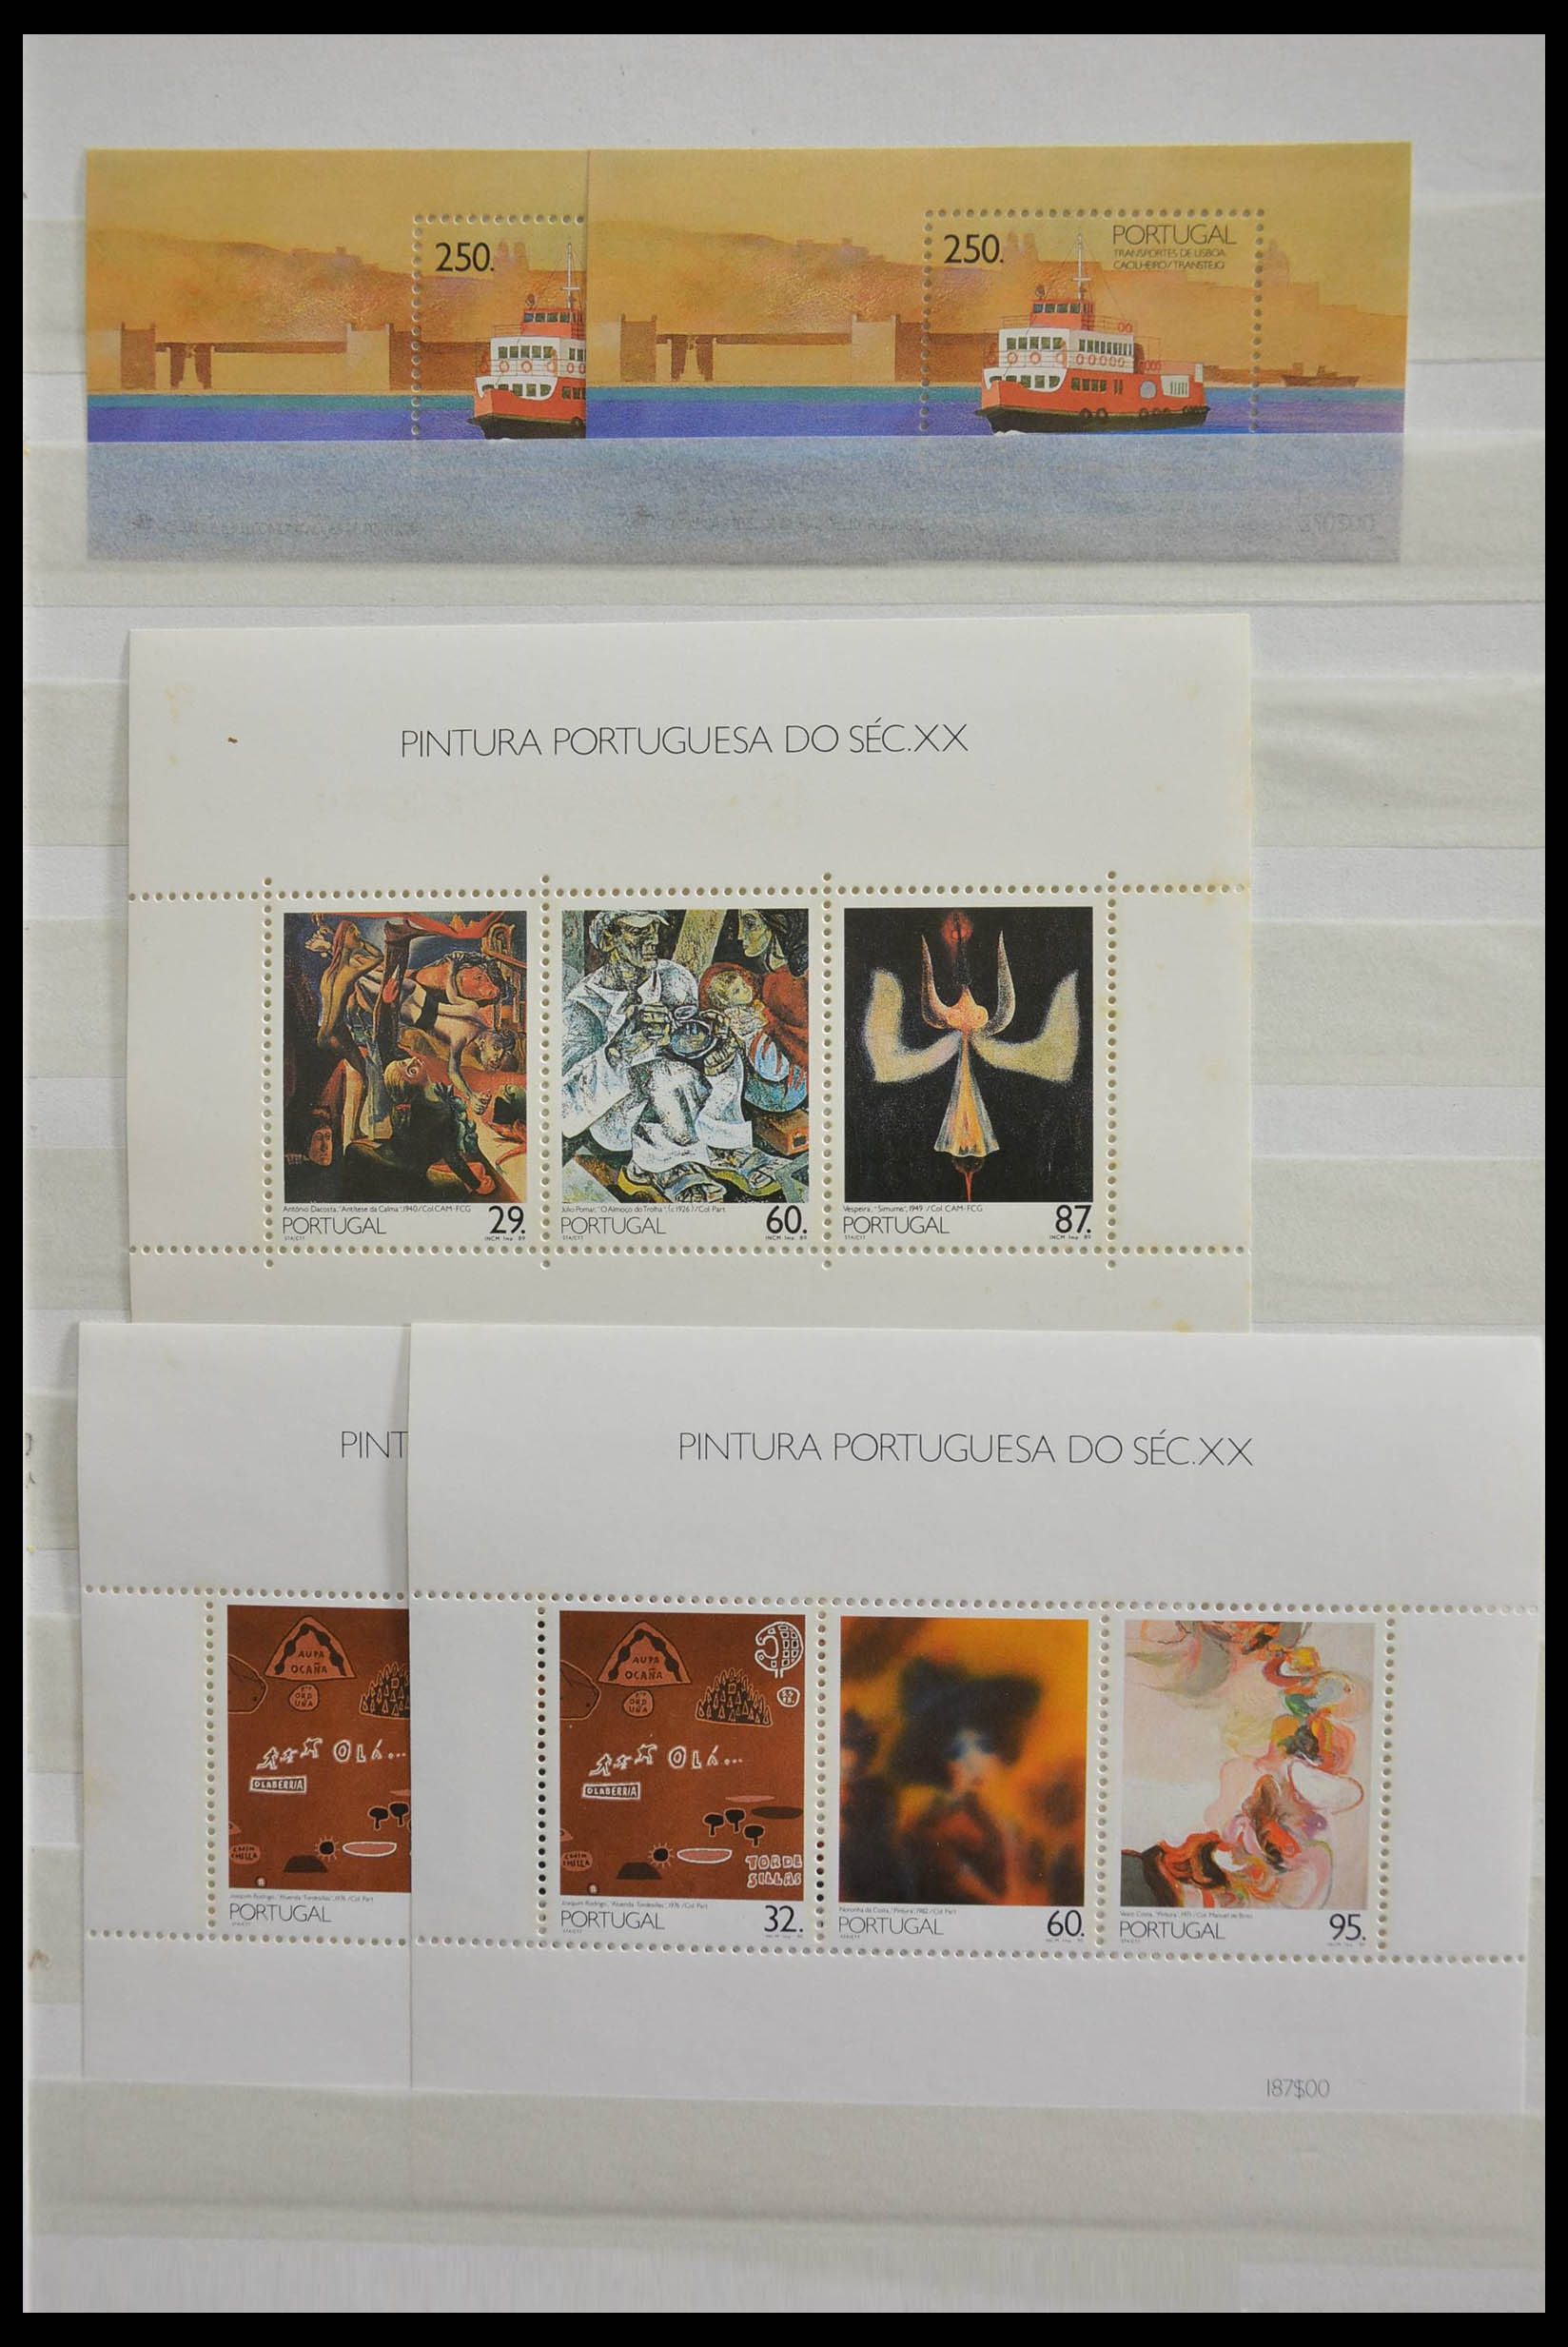 28540 015 - 28540 Portugal souvenir sheets.